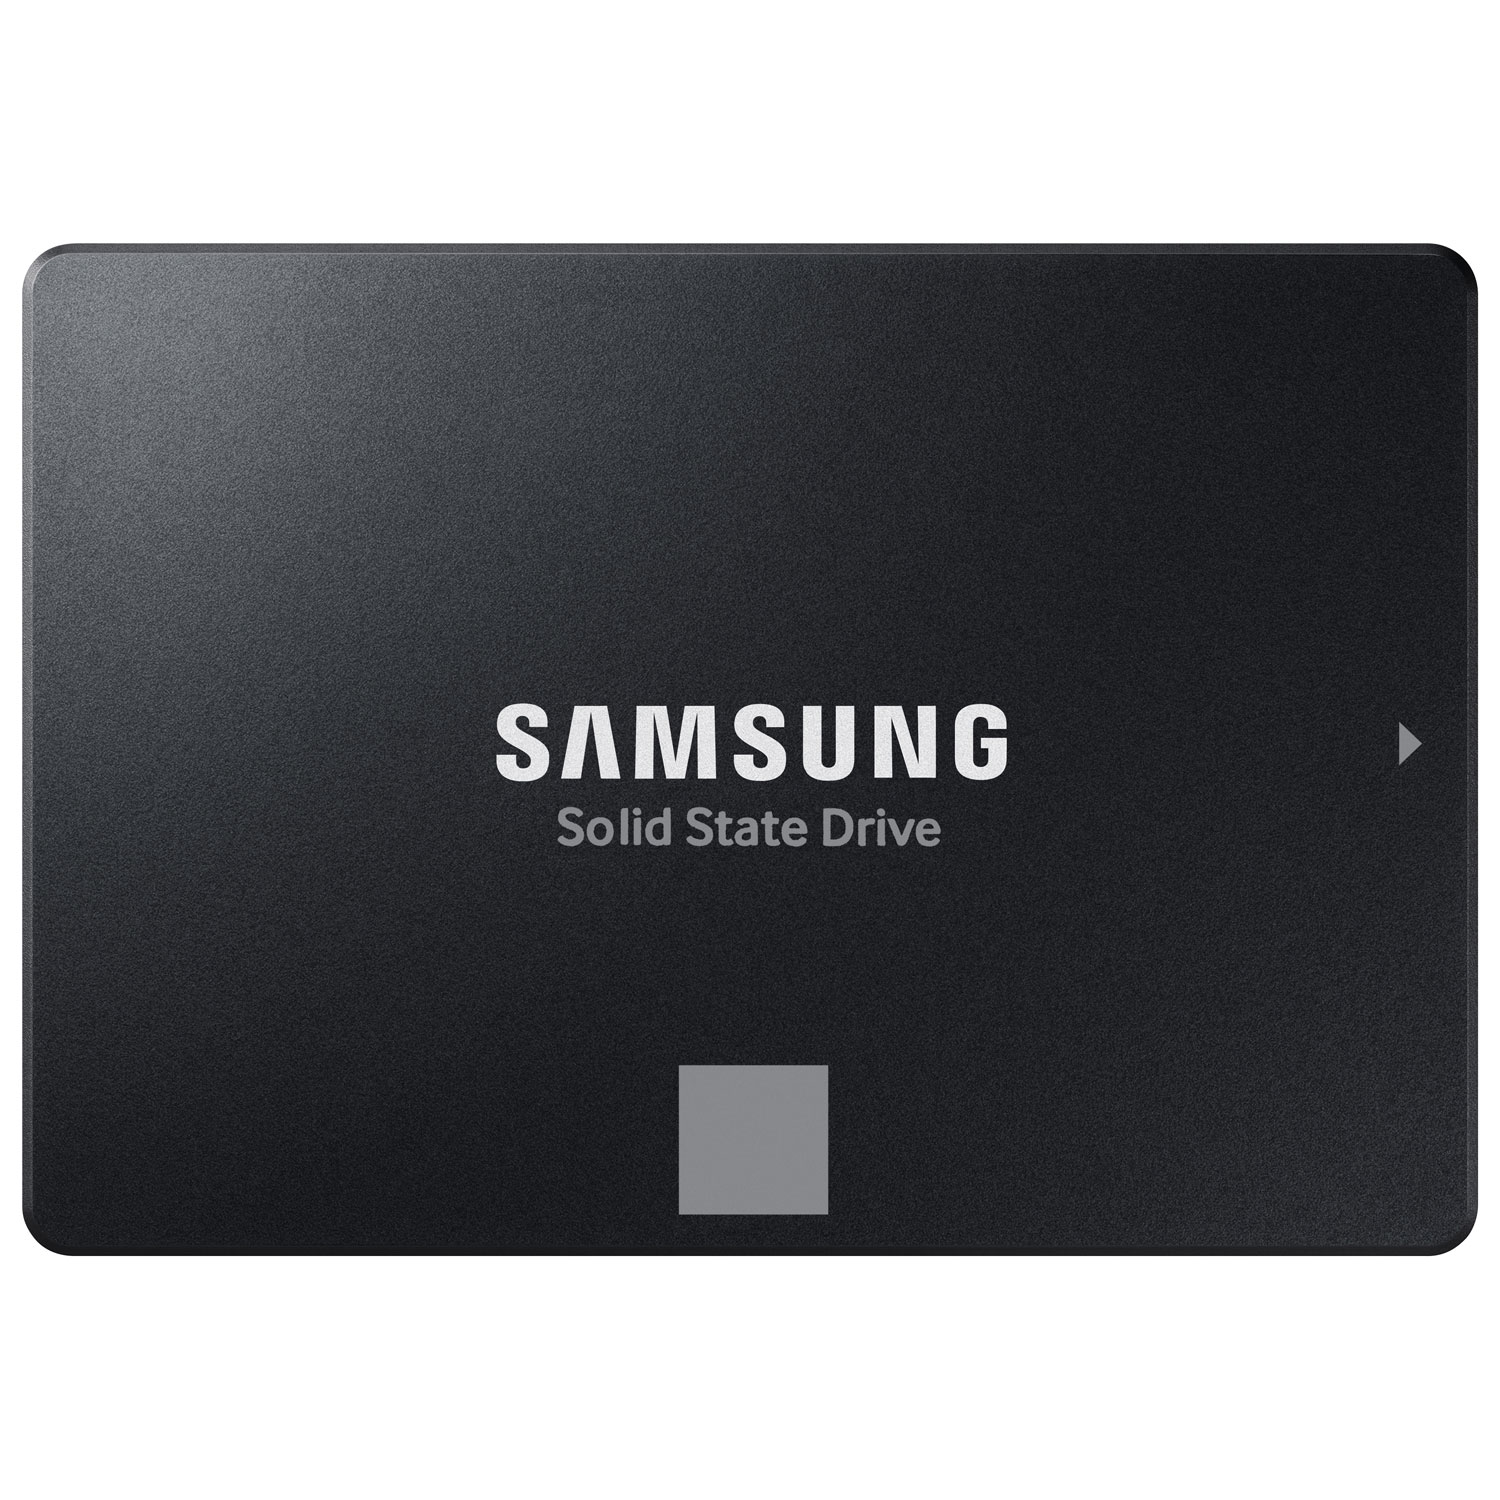 Samsung 870 EVO 500GB SATA III Internal Solid State Drive (MZ-77E500B/AM) - English